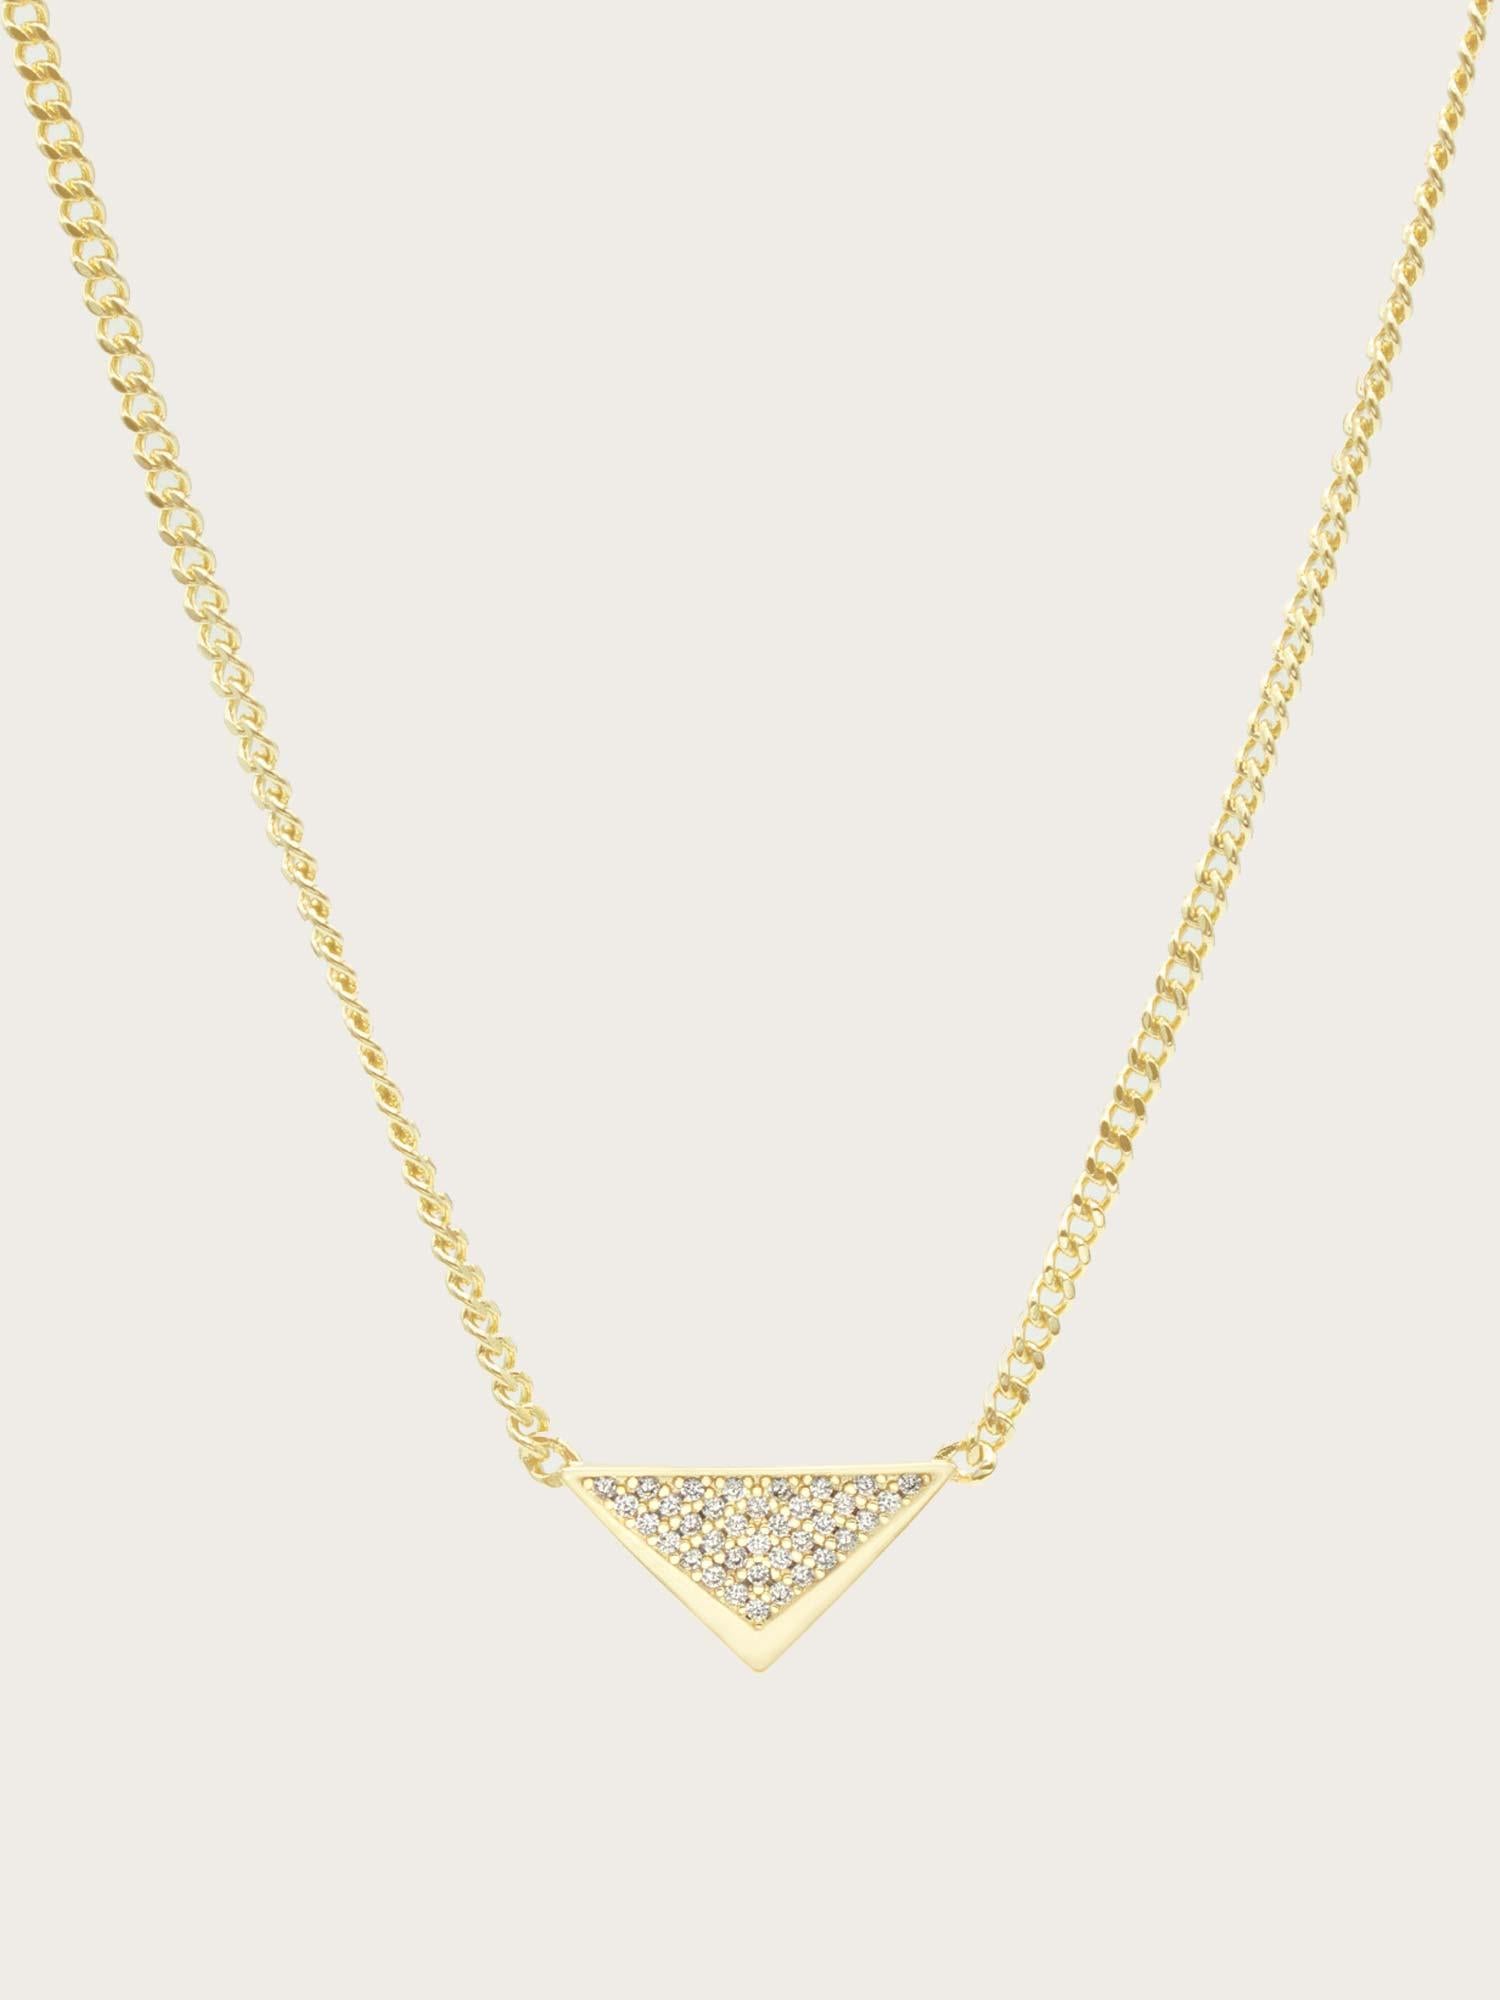 Martini Necklace - Gold